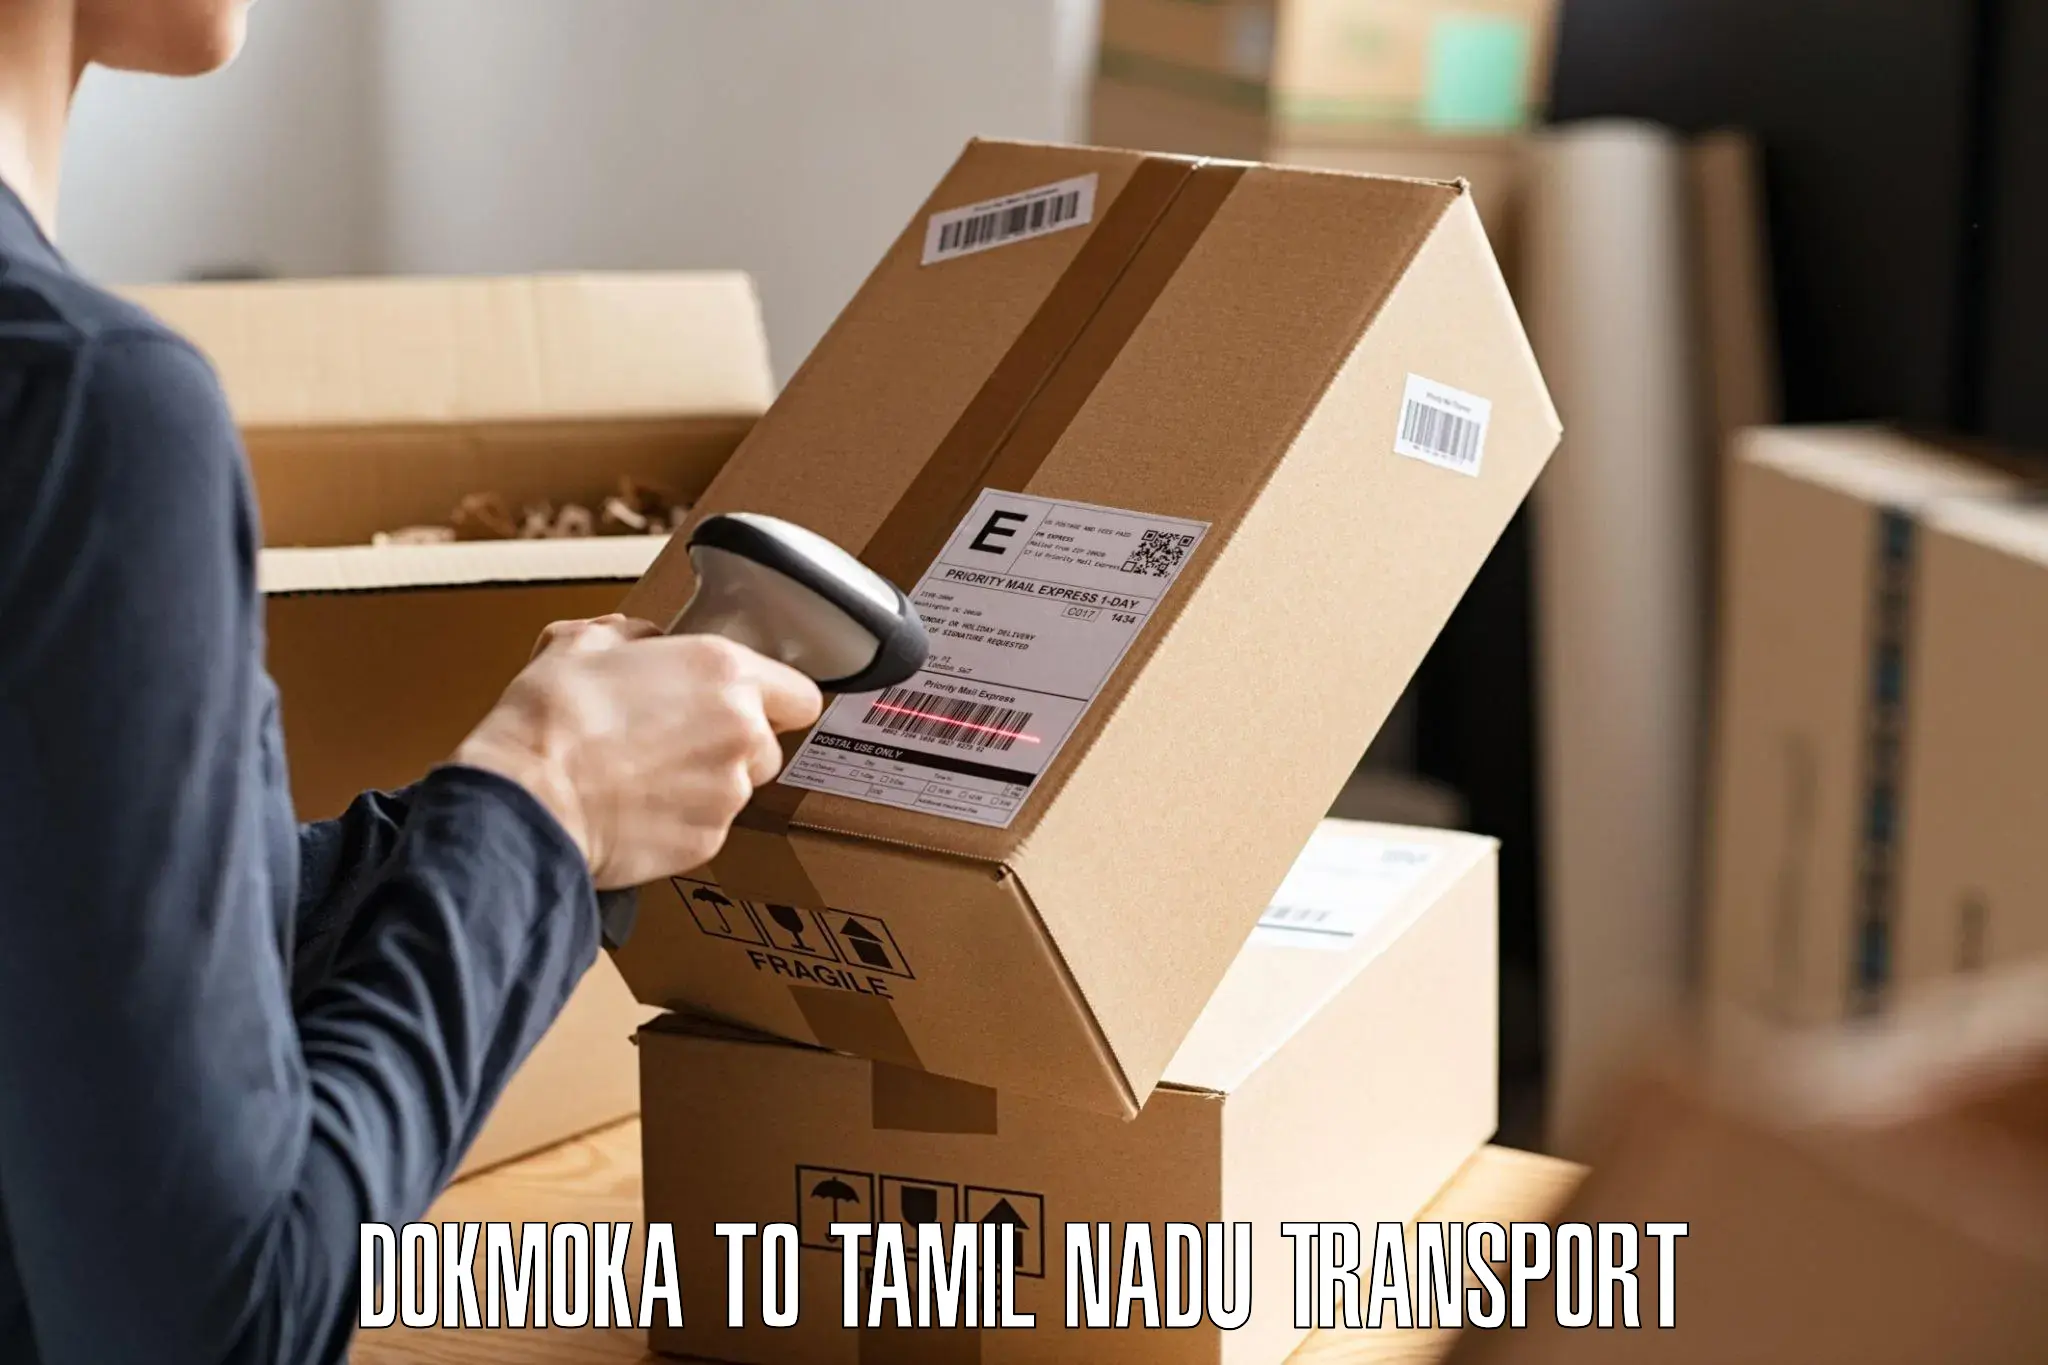 Goods delivery service Dokmoka to Velur